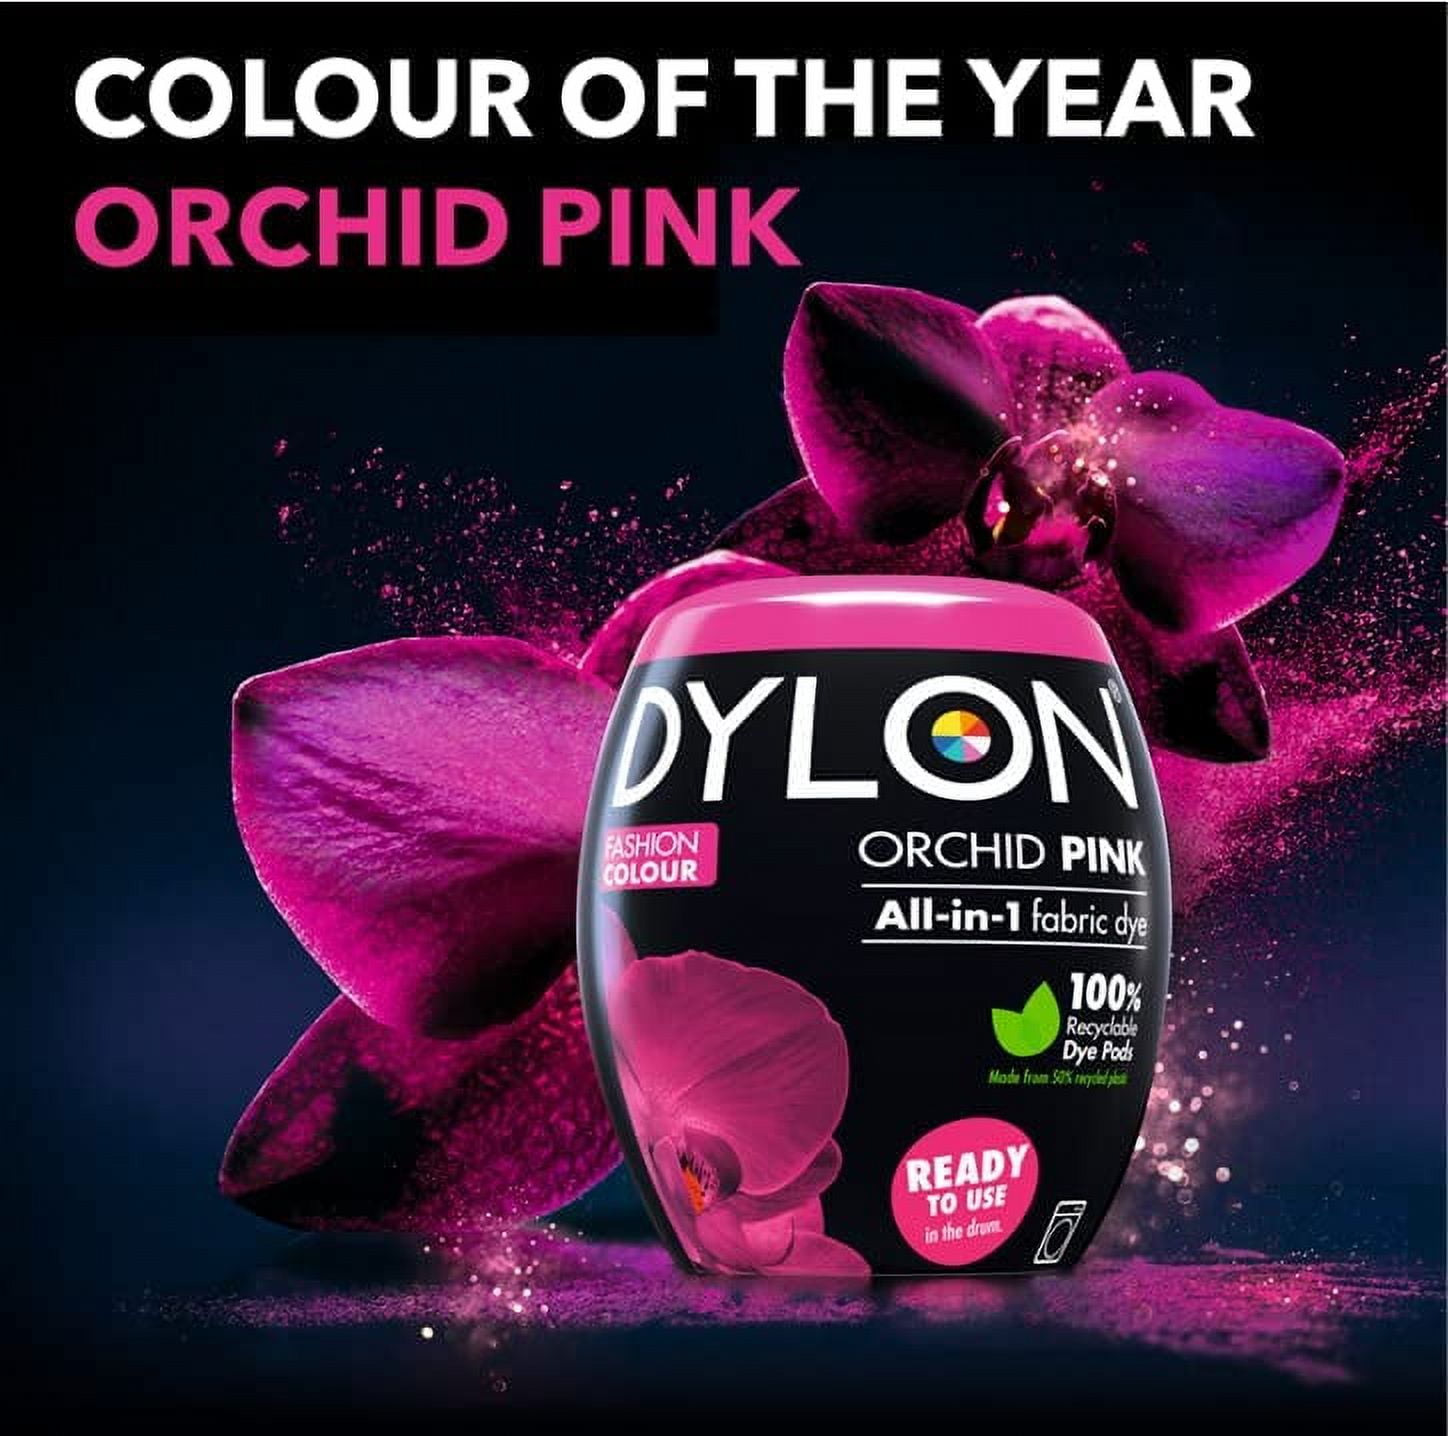 Dylon Machine Fabric Dye, Velvet Black- 100g – Lincraft